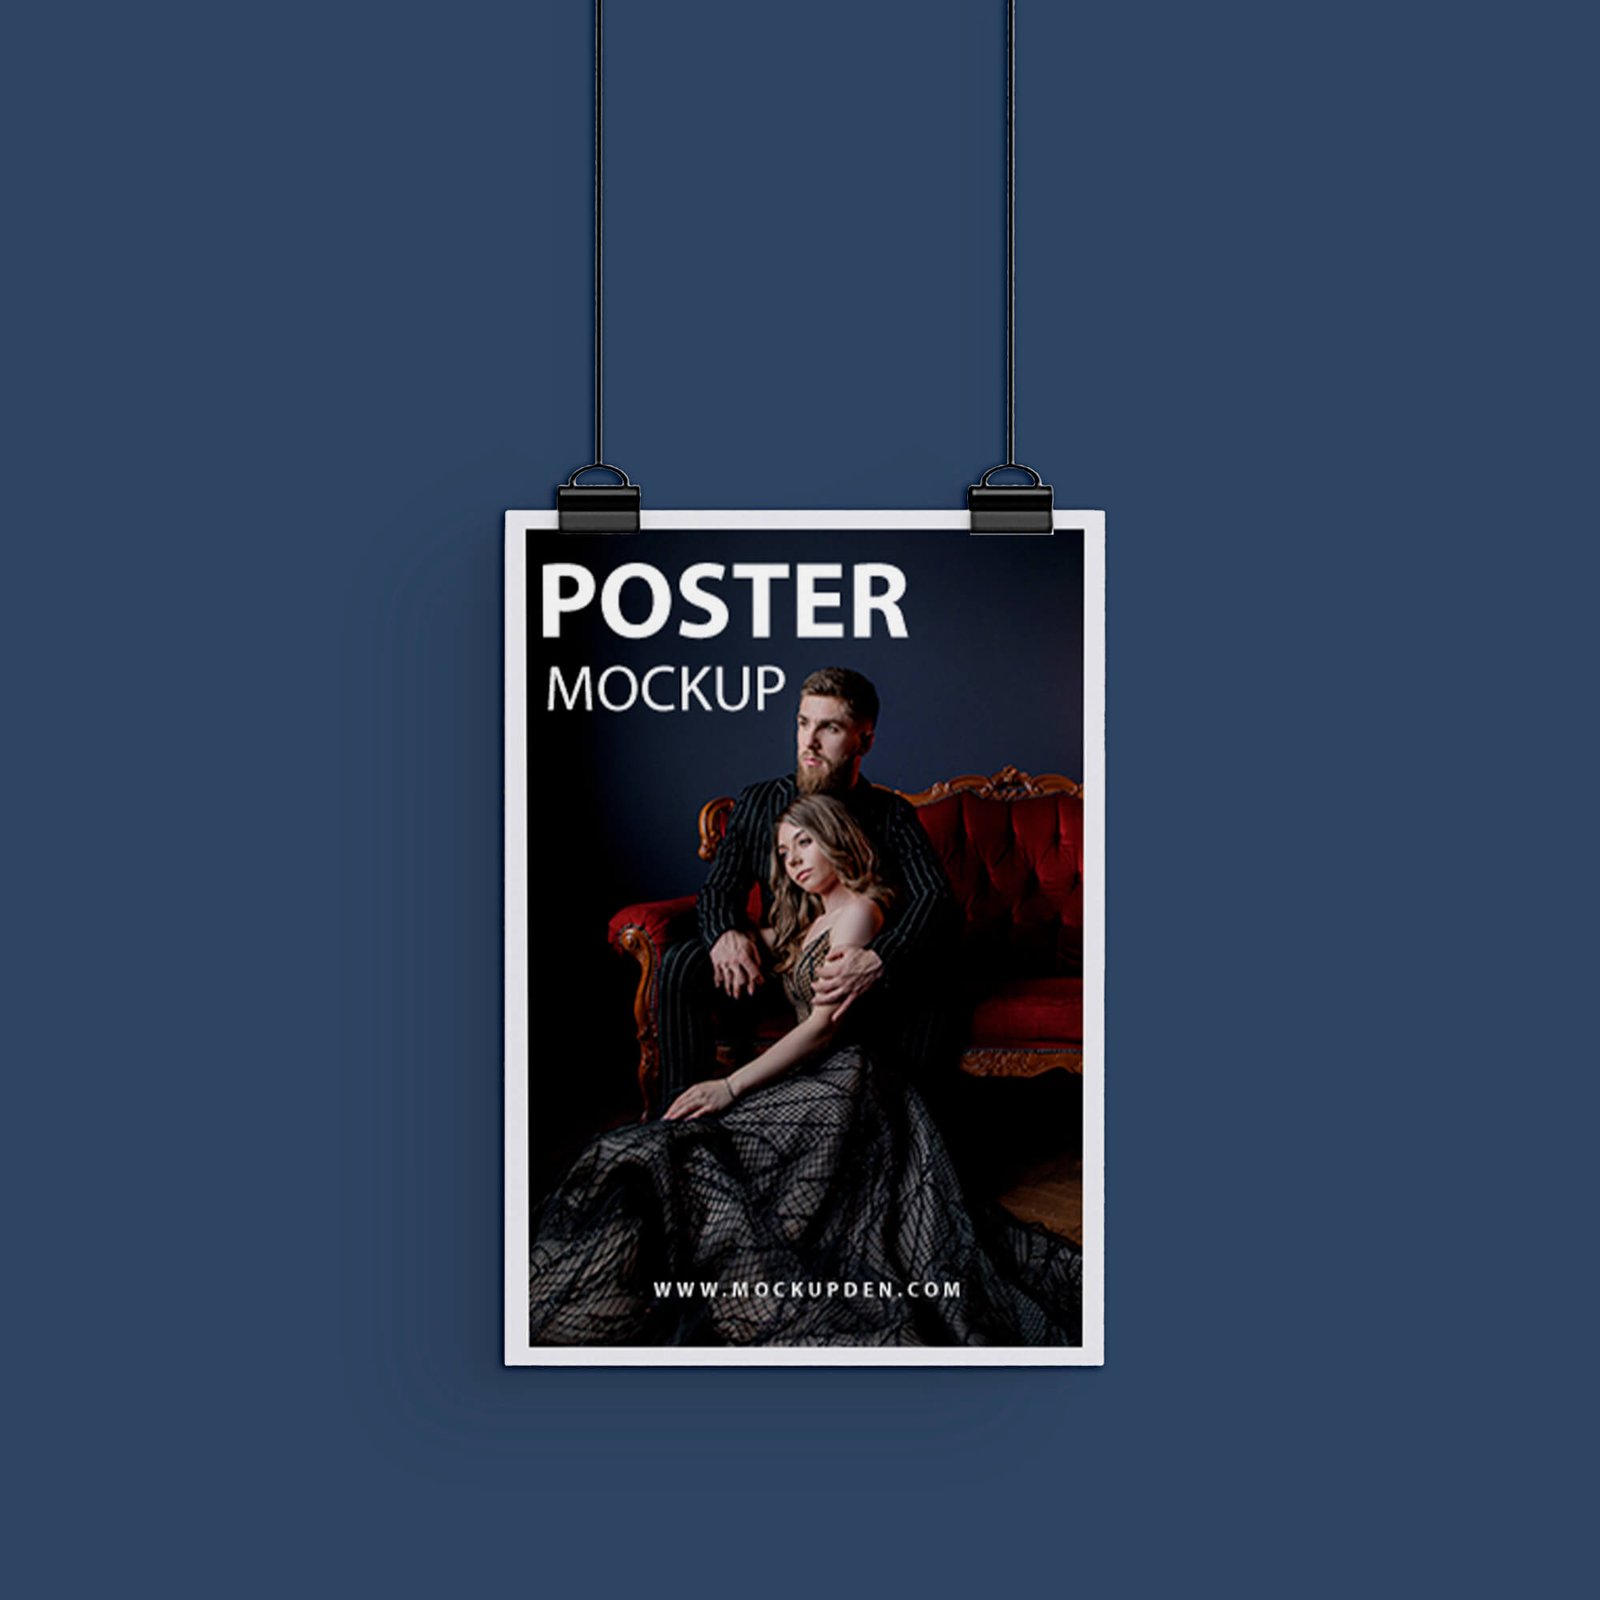 Design Free Hanging Poster Mockup PSD Template